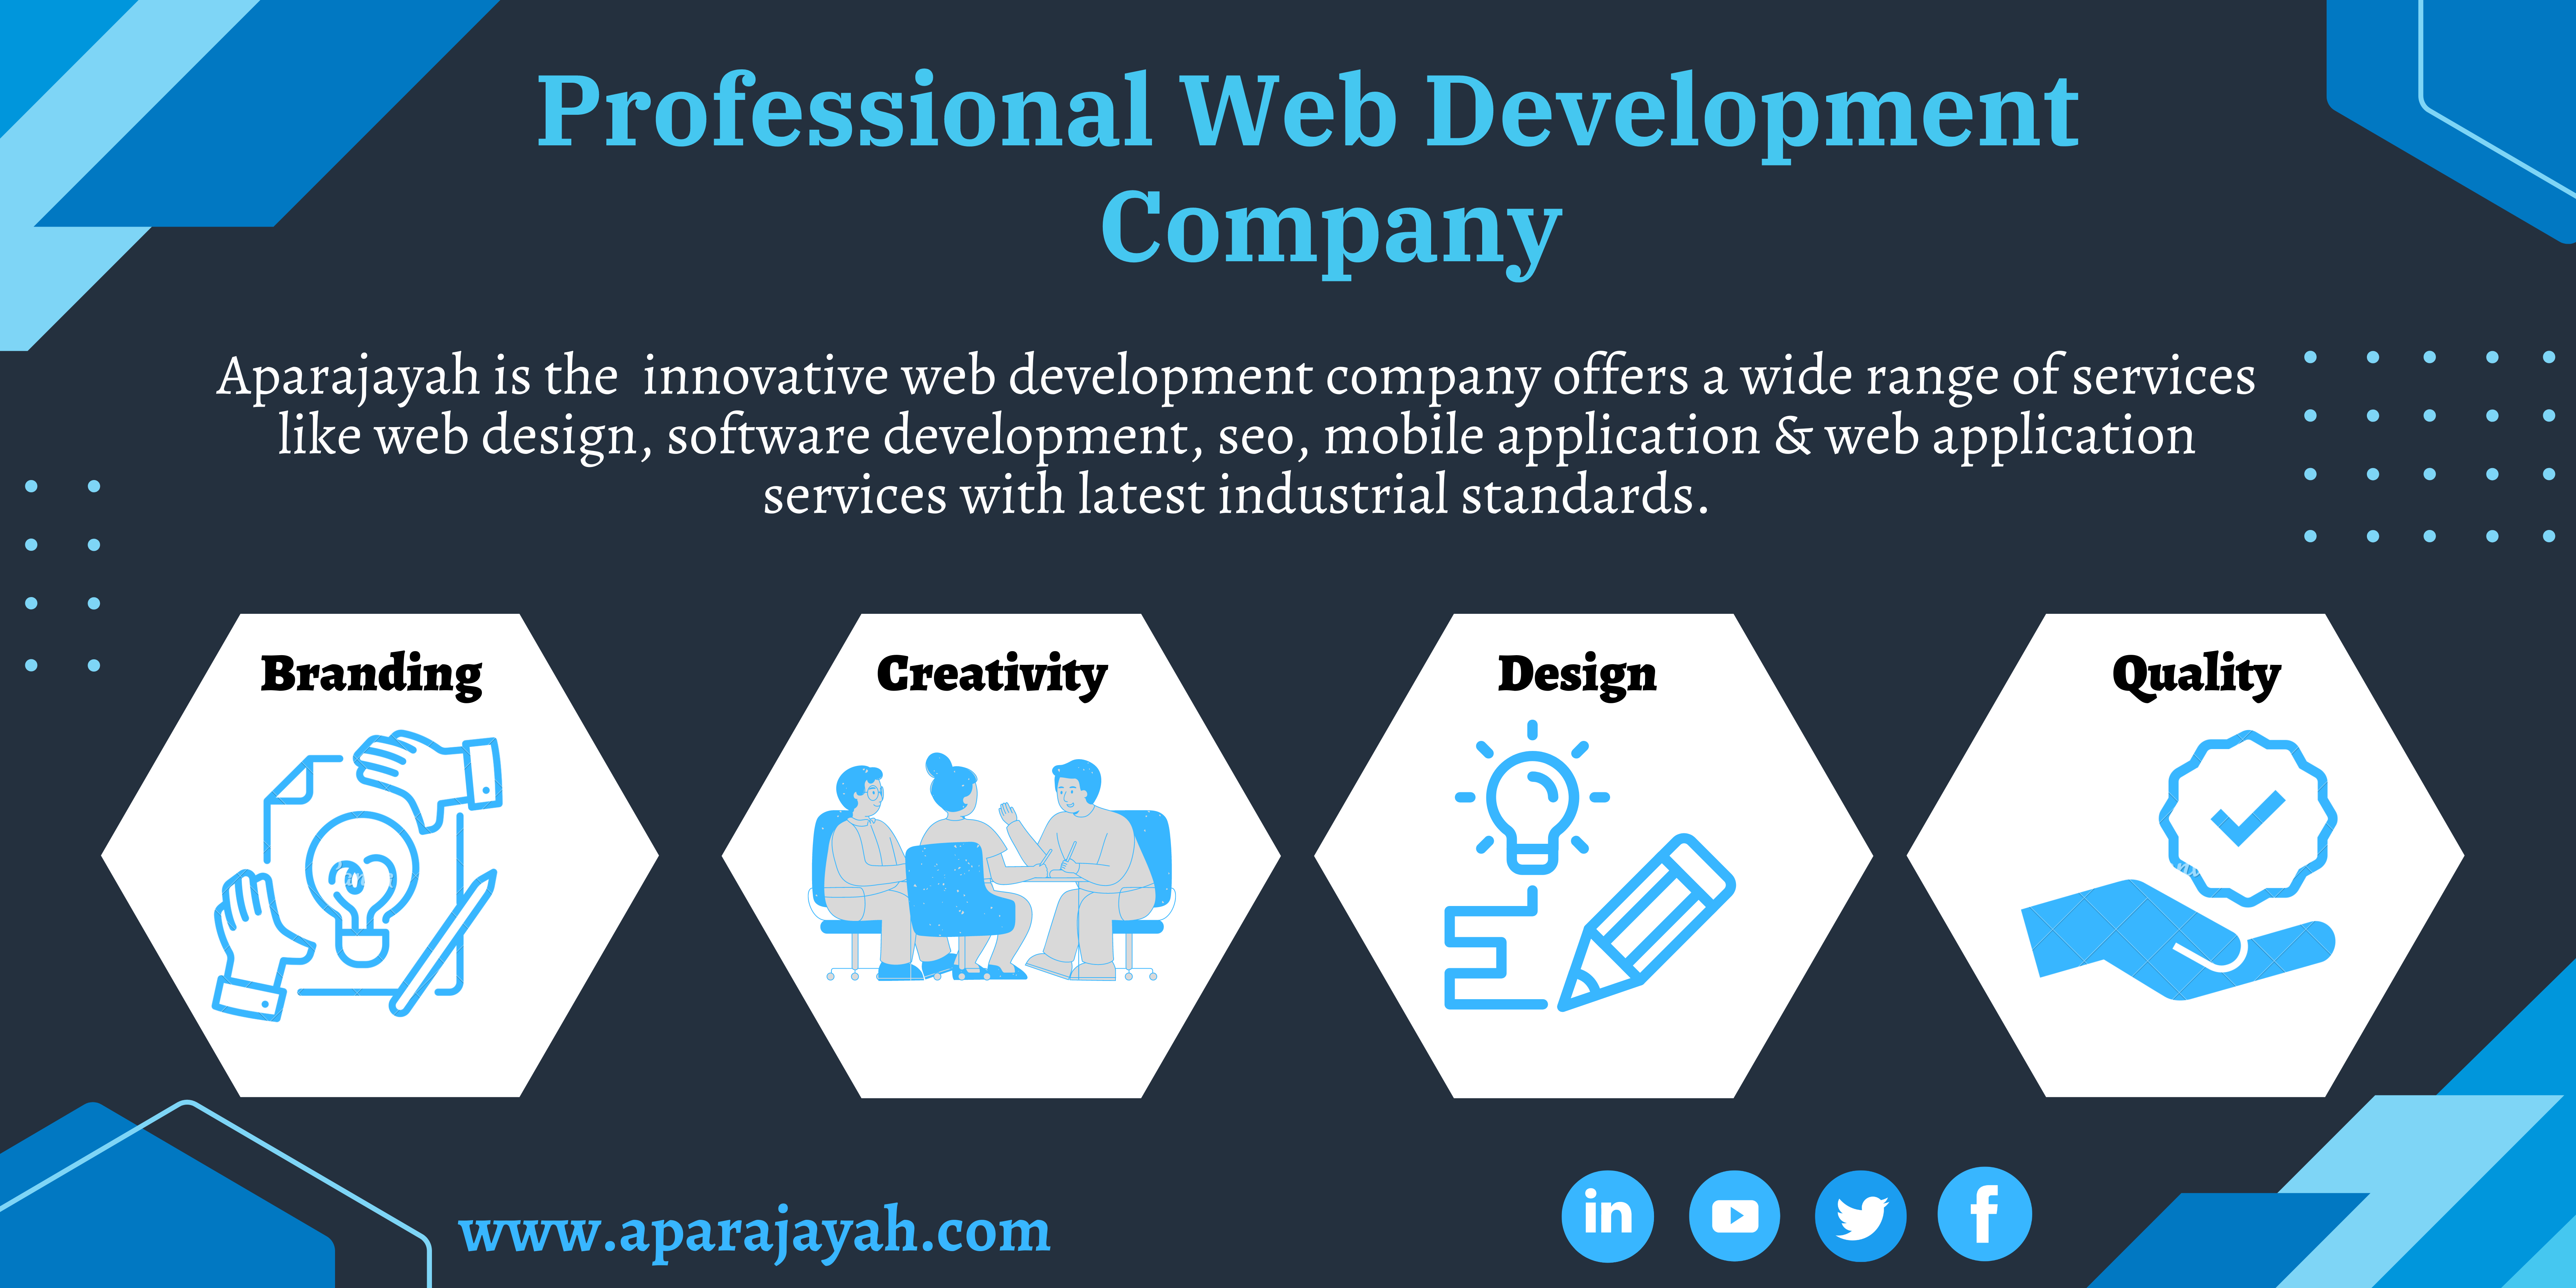 Web Development Company - Aparajayah|Legal Services|Professional Services